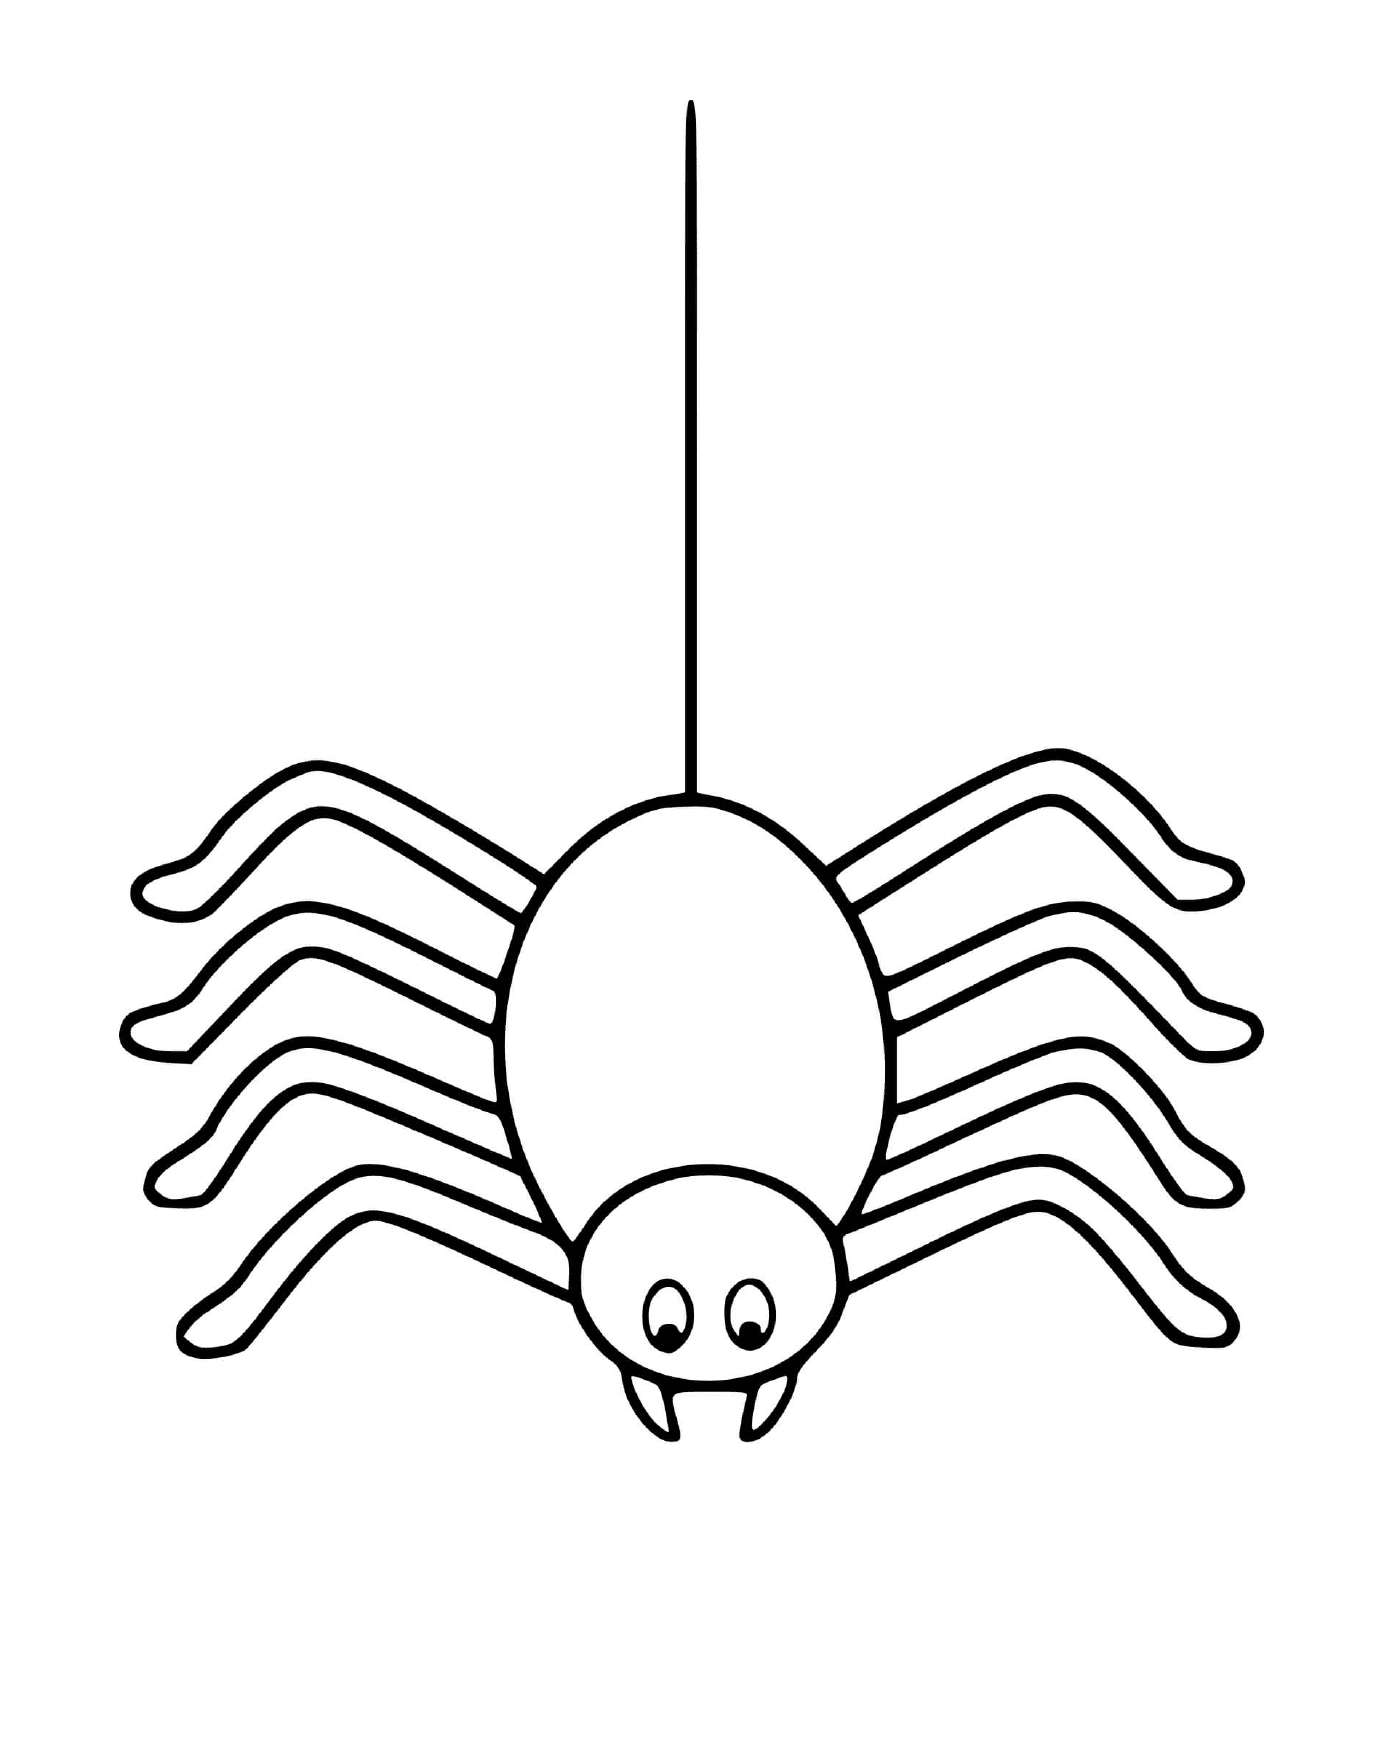   Une araignée qui descend 